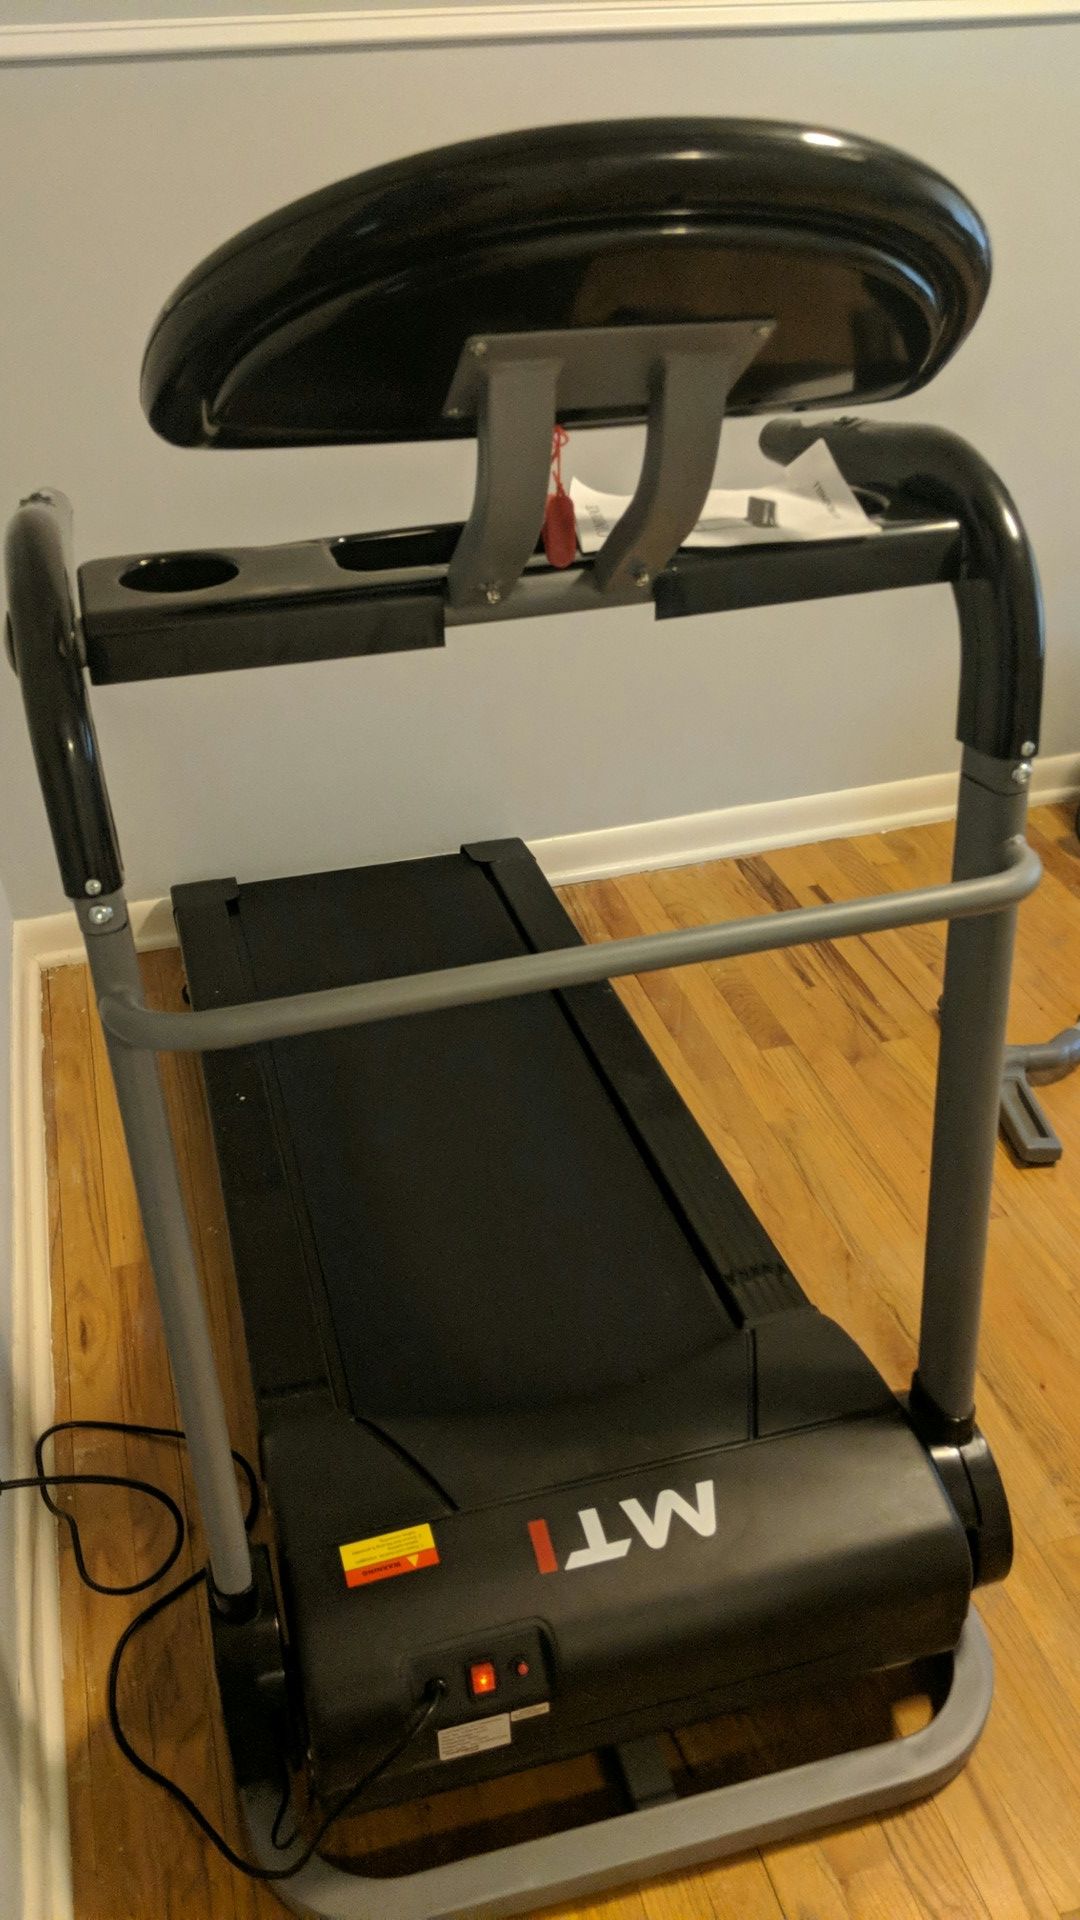 Folding treadmill brand new never used